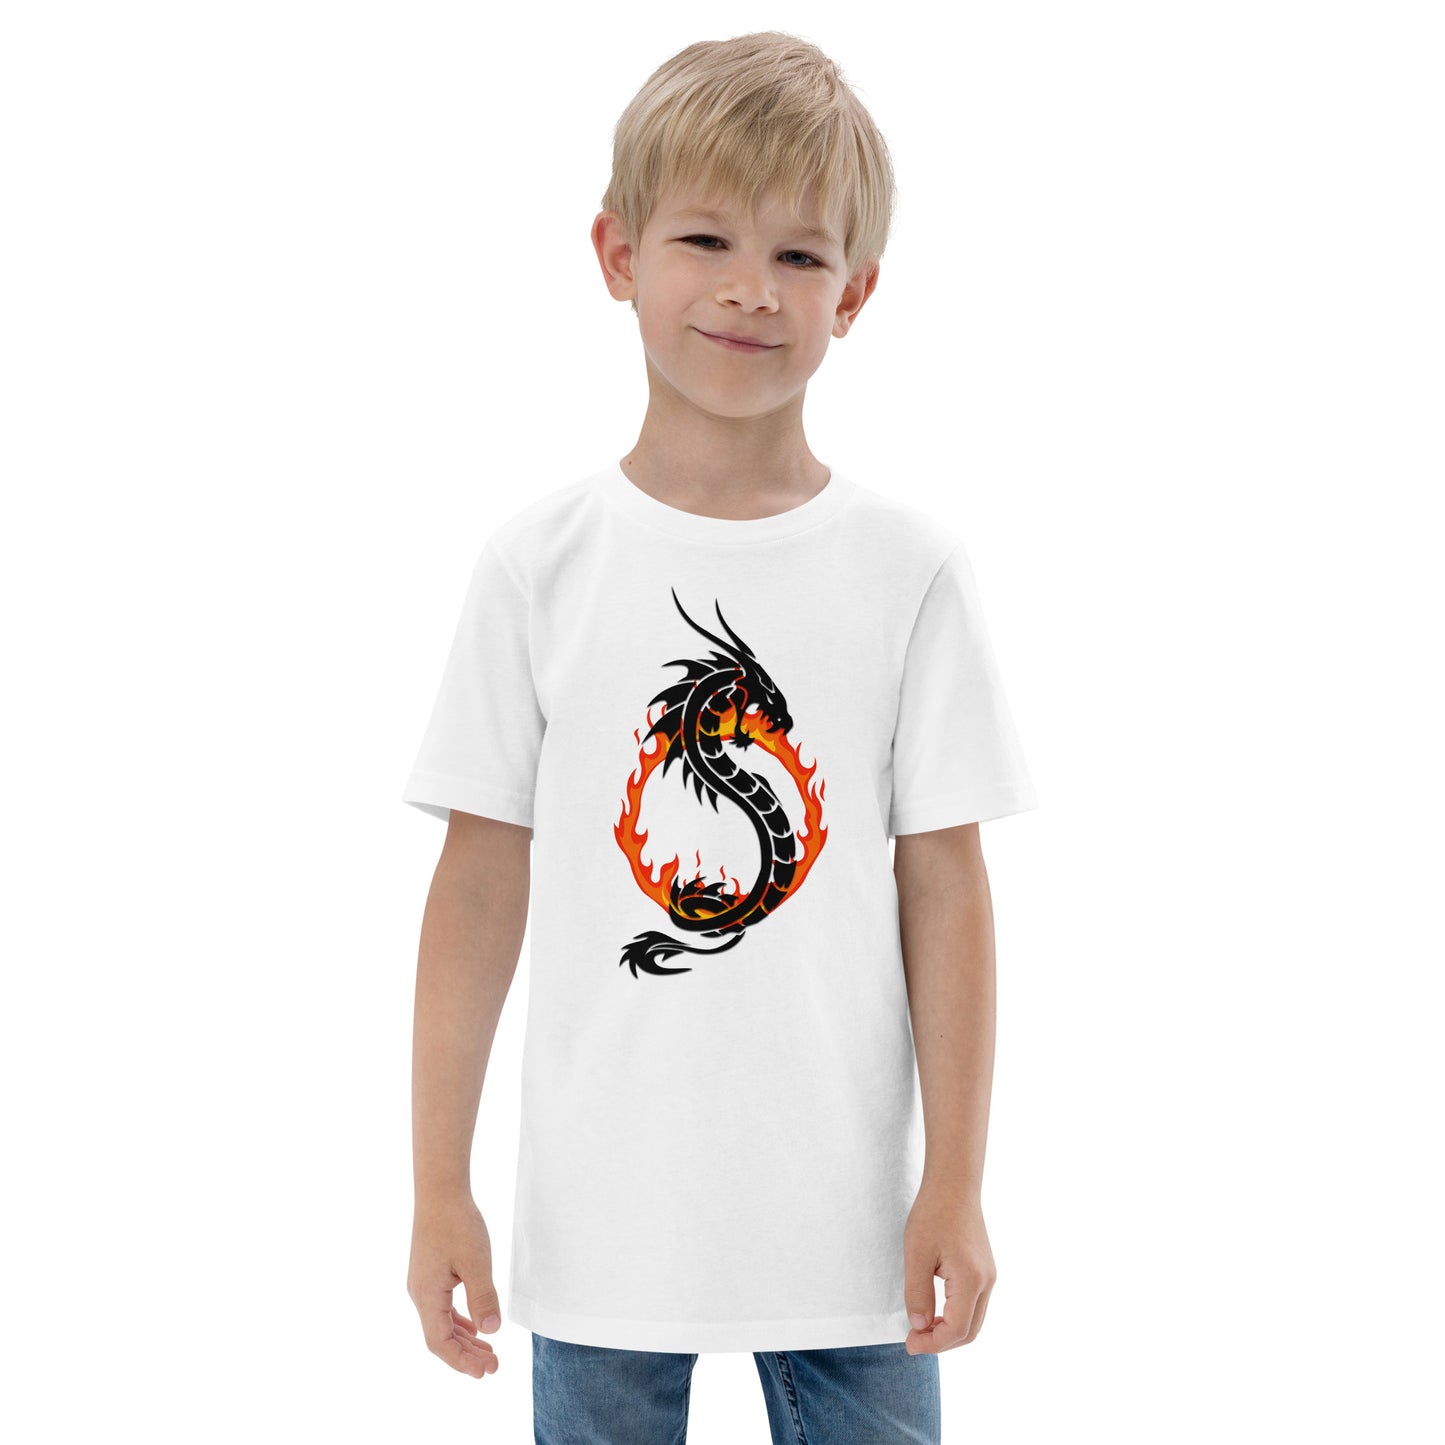 Youth Dragon jersey t-shirt